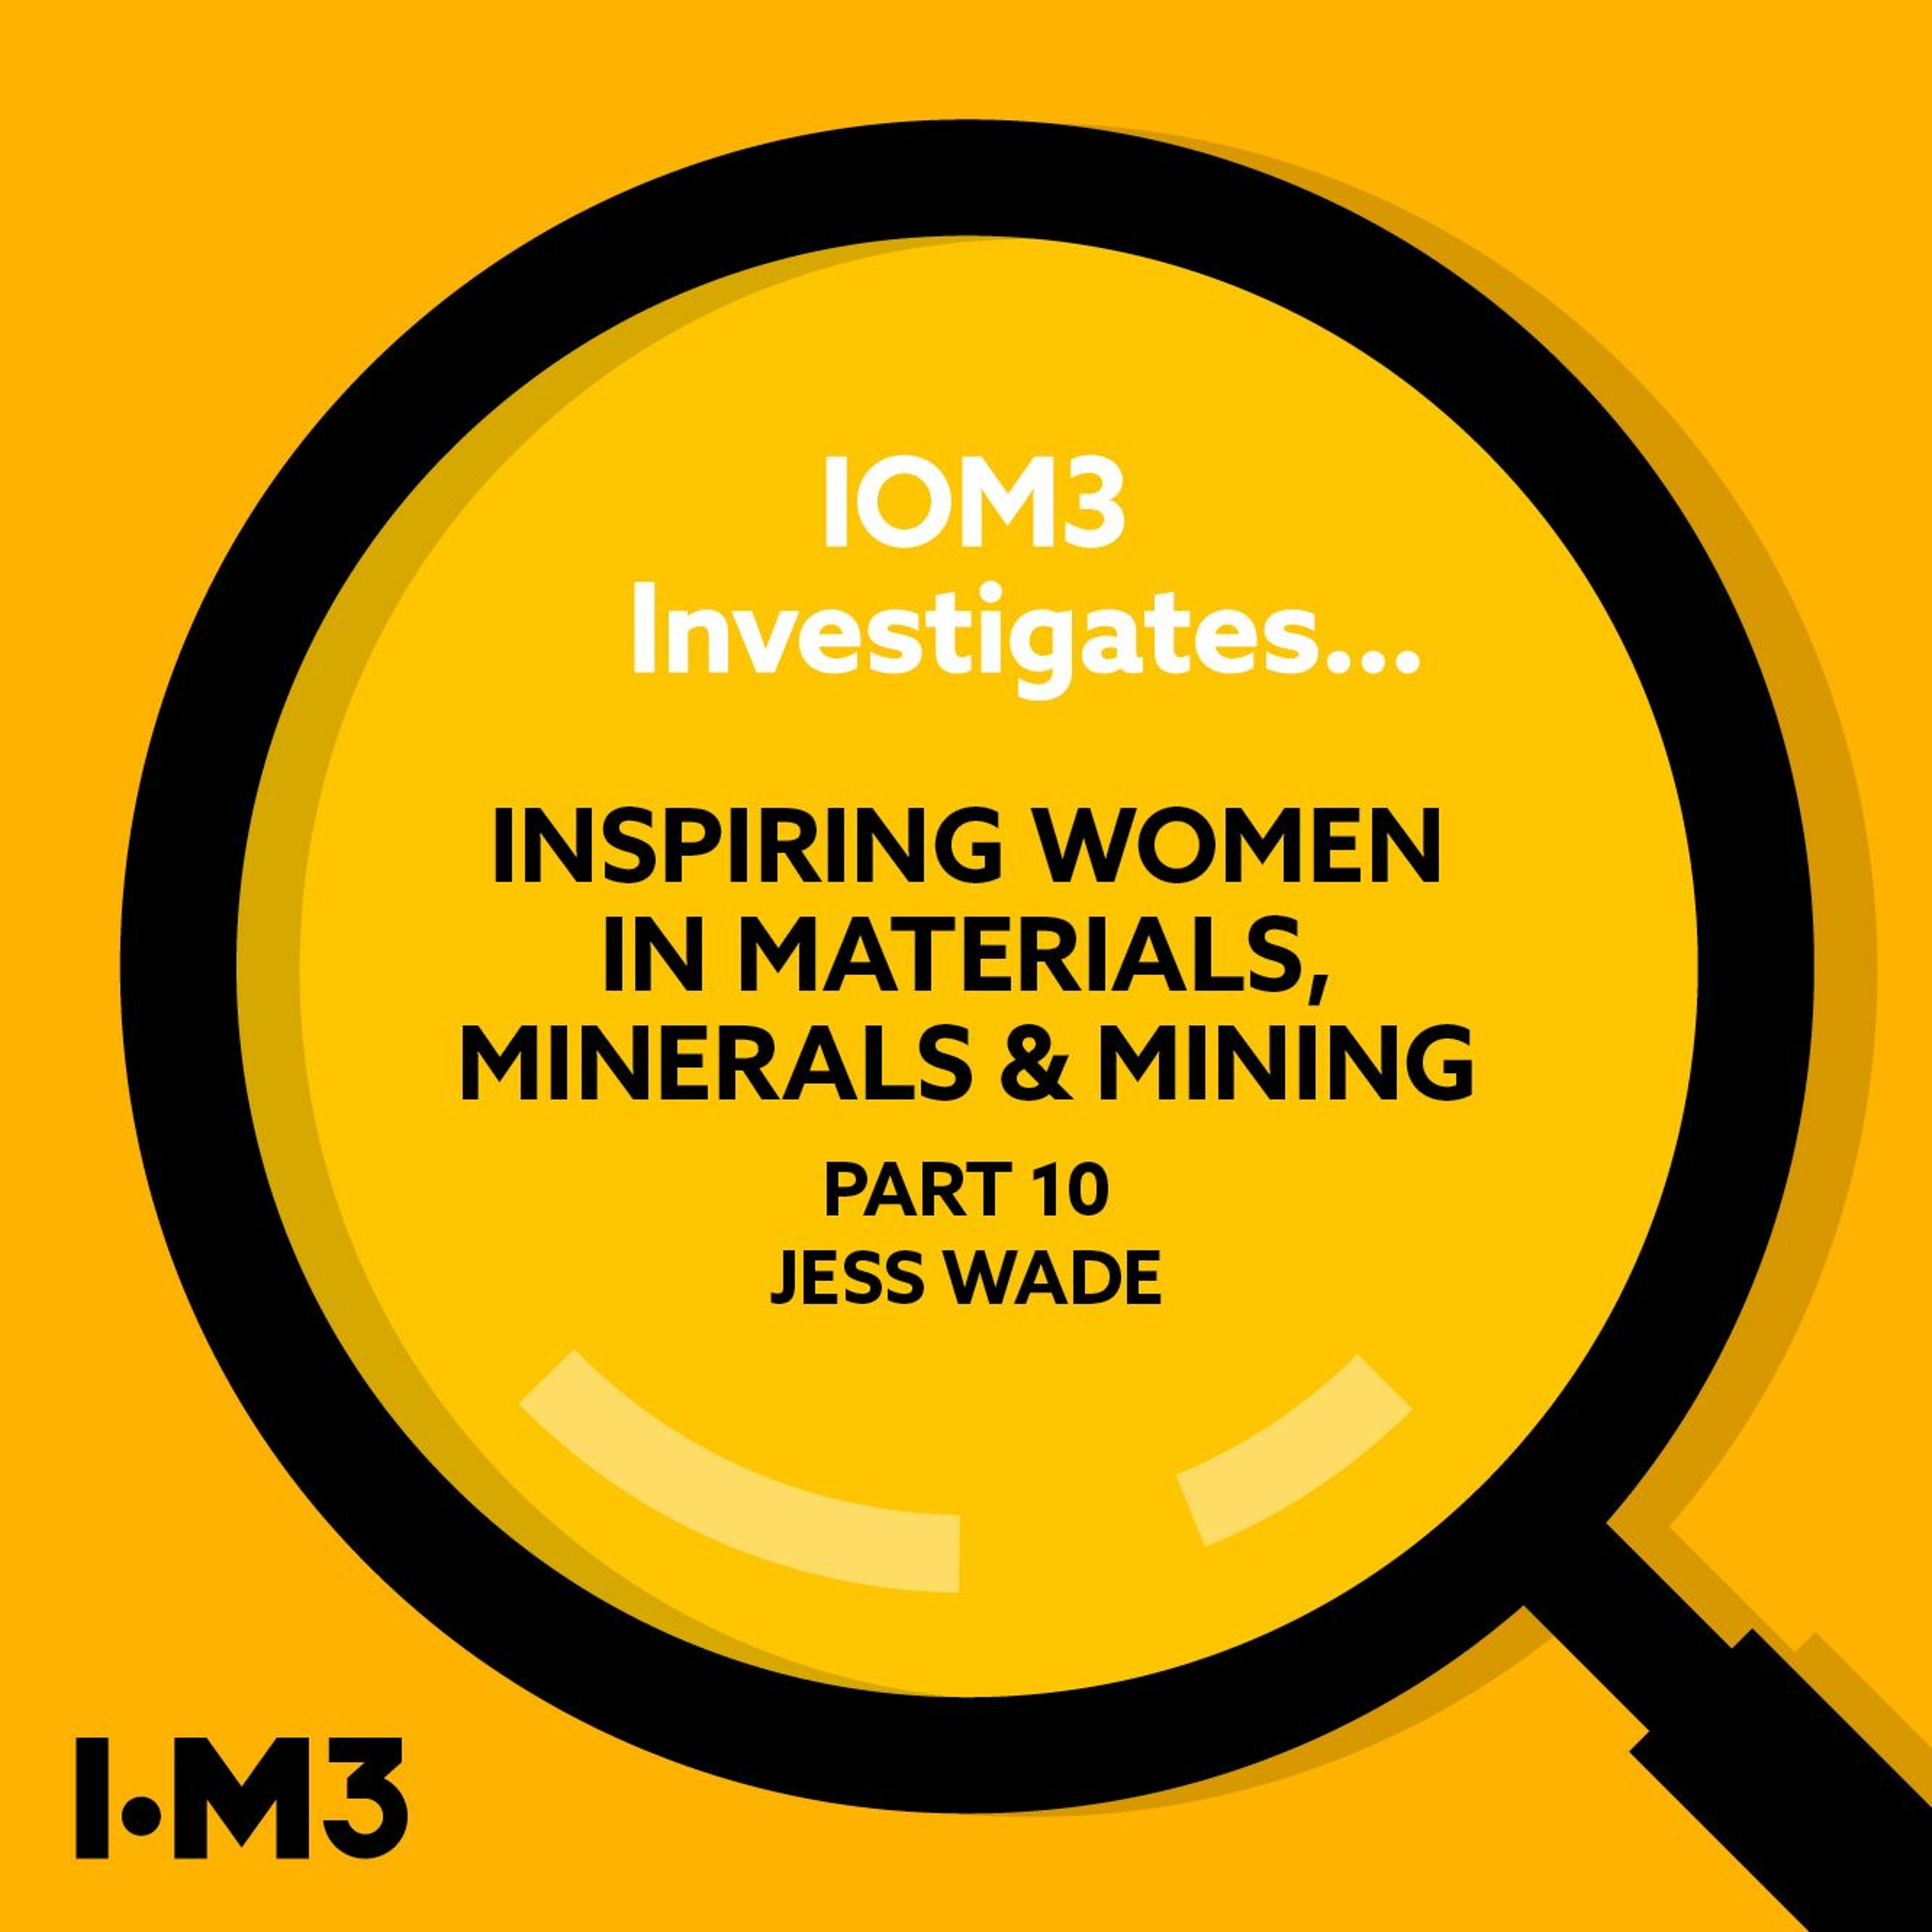 IOM3 Investigates...Inspiring women in Materials, Minerals & Mining, Jess Wade